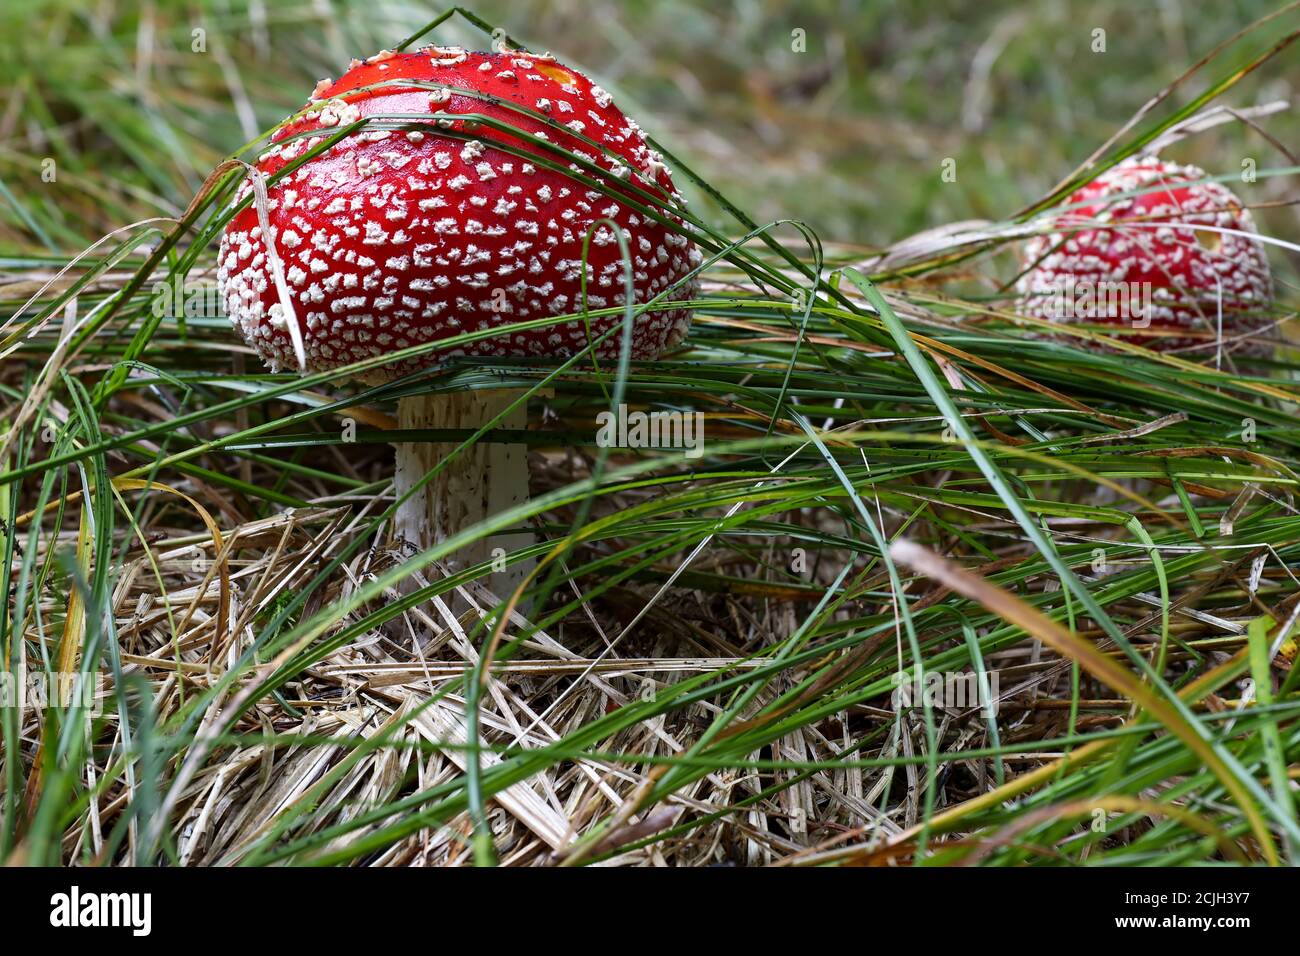 Roter Toadstool wächst im Gras - Amanita muscaria, giftiger Pilz; Stockfoto